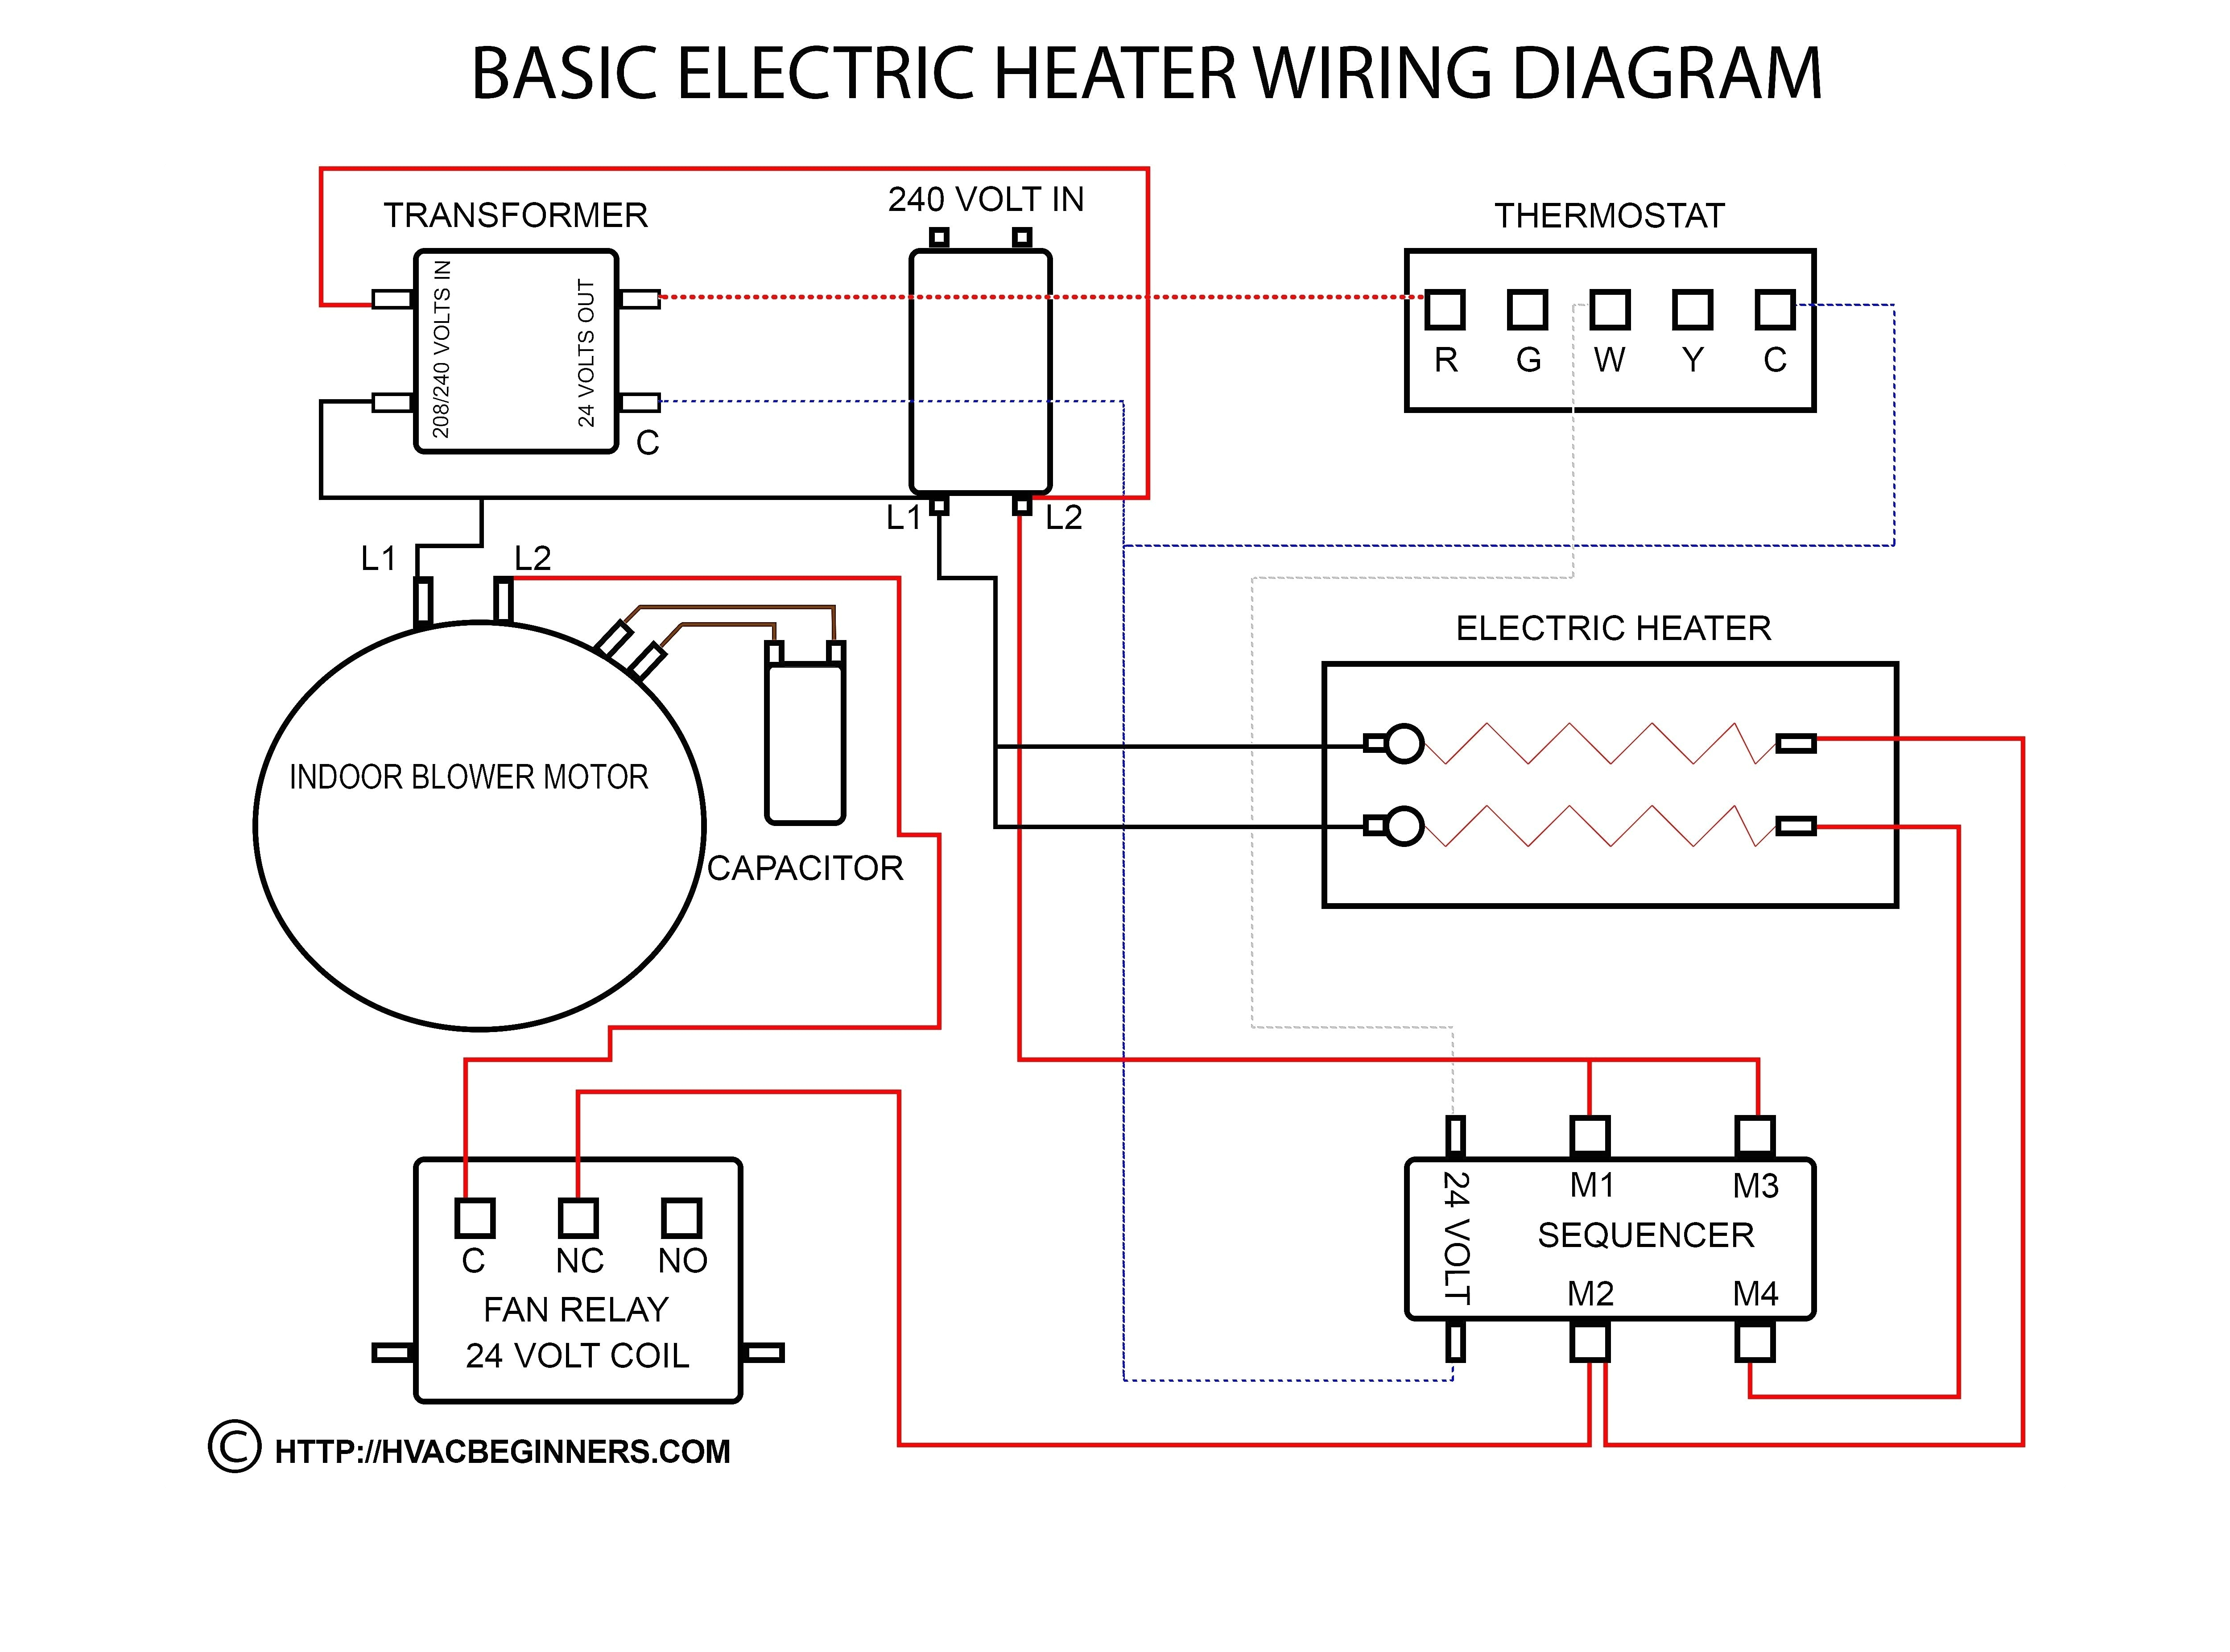 clarion m5475 wiring diagram rc wiring diagram clarion vz401 wiring diagram clarion deck wiring diagram